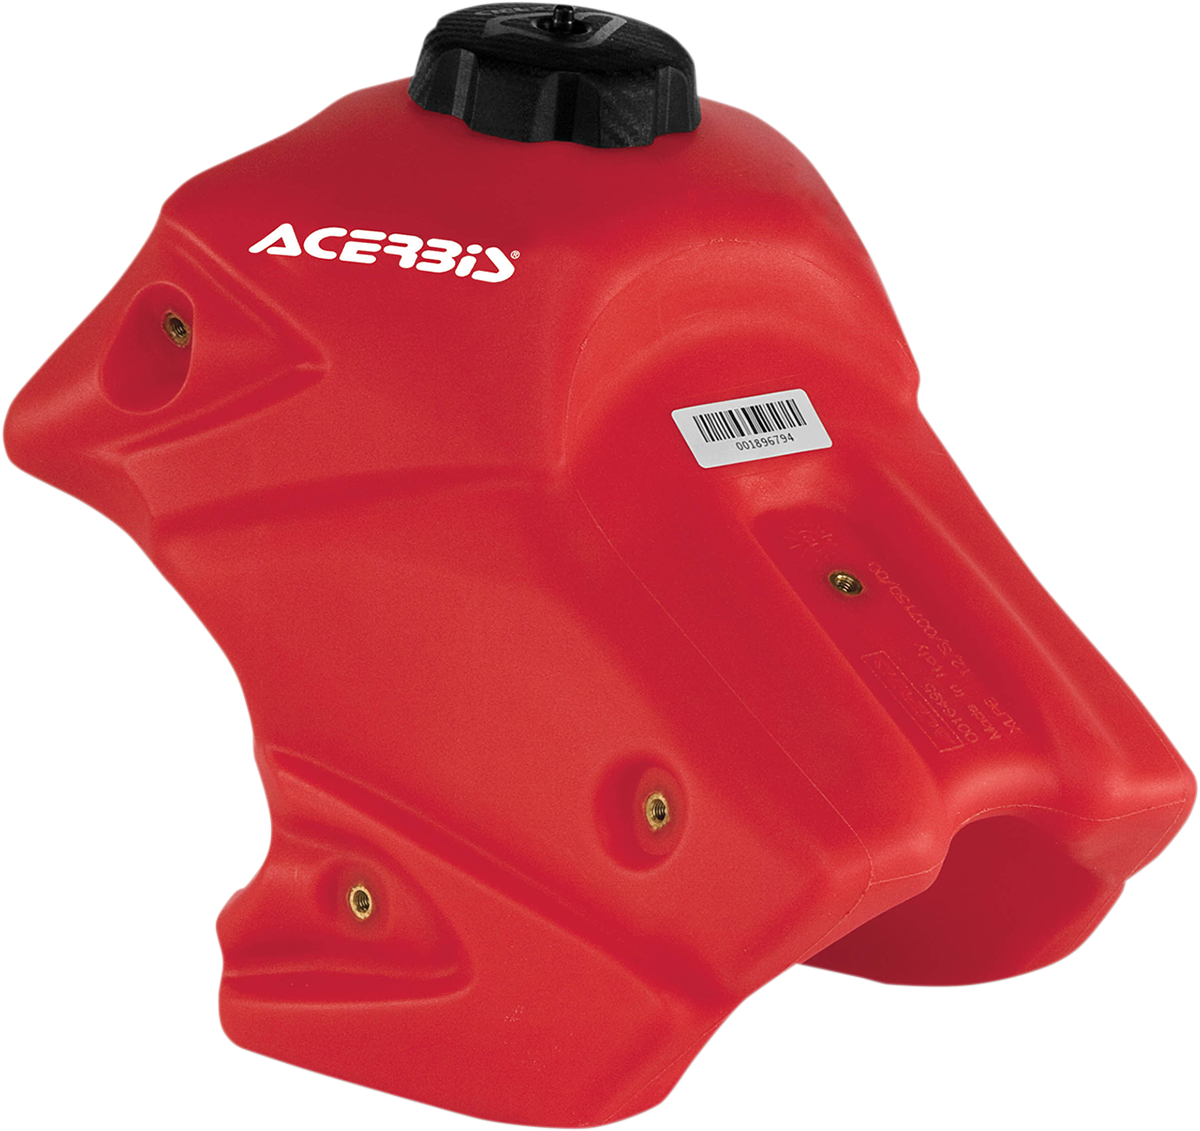 ACERBIS Gas Tank - Red - Honda - 1.7 Gallon 2374030004